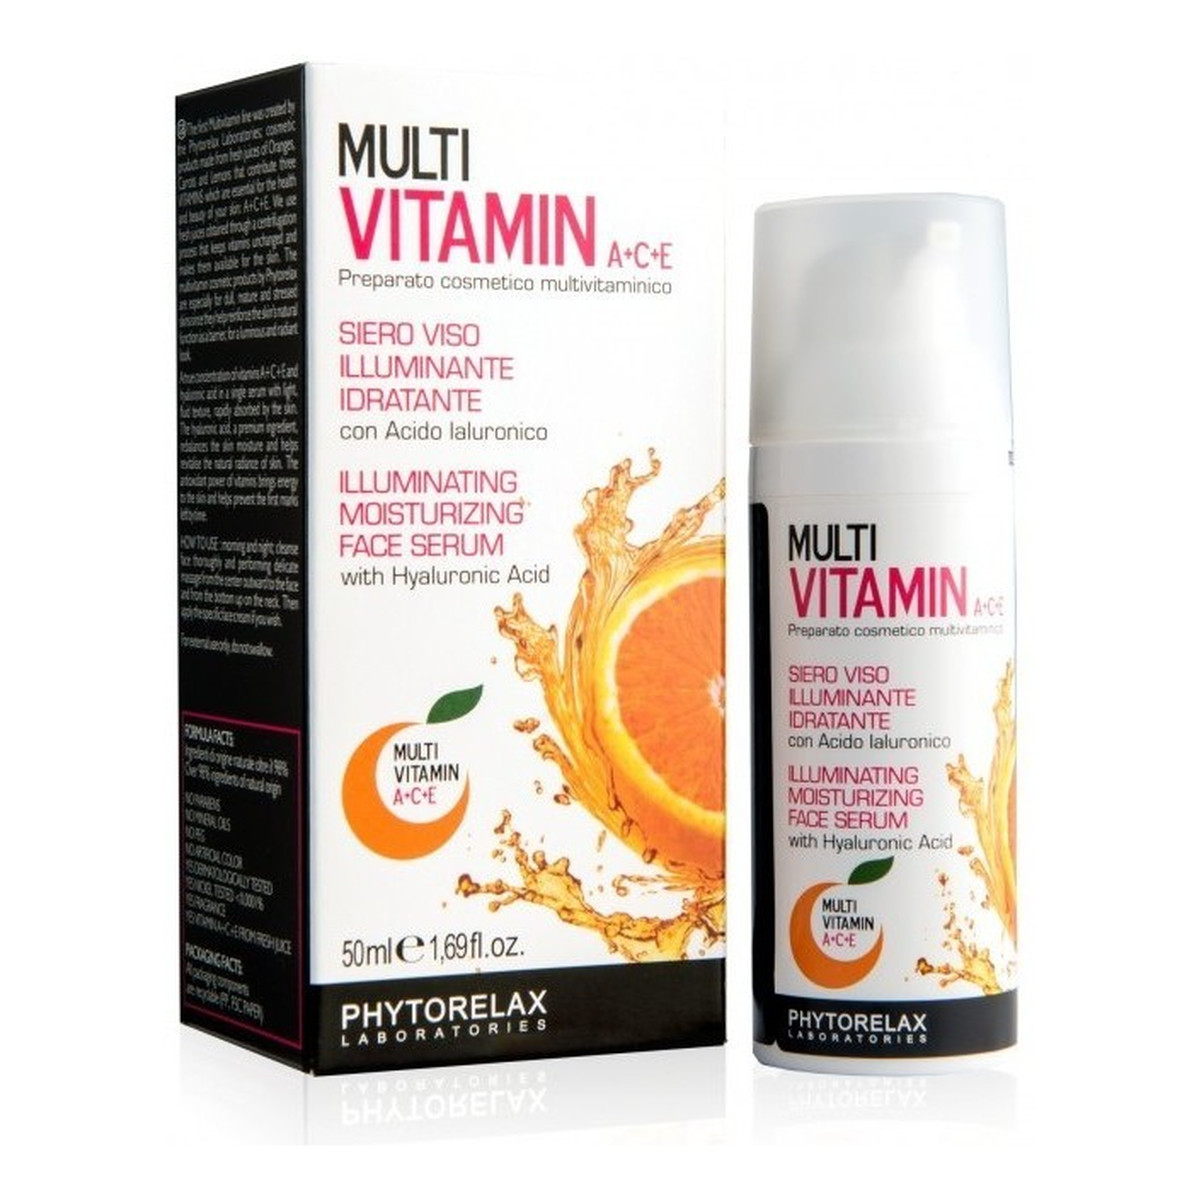 Phytorelax Multi Vitamin A+C+E Illuminating Moisturizing Face Serum multiwitaminowe do twarzy 50ml